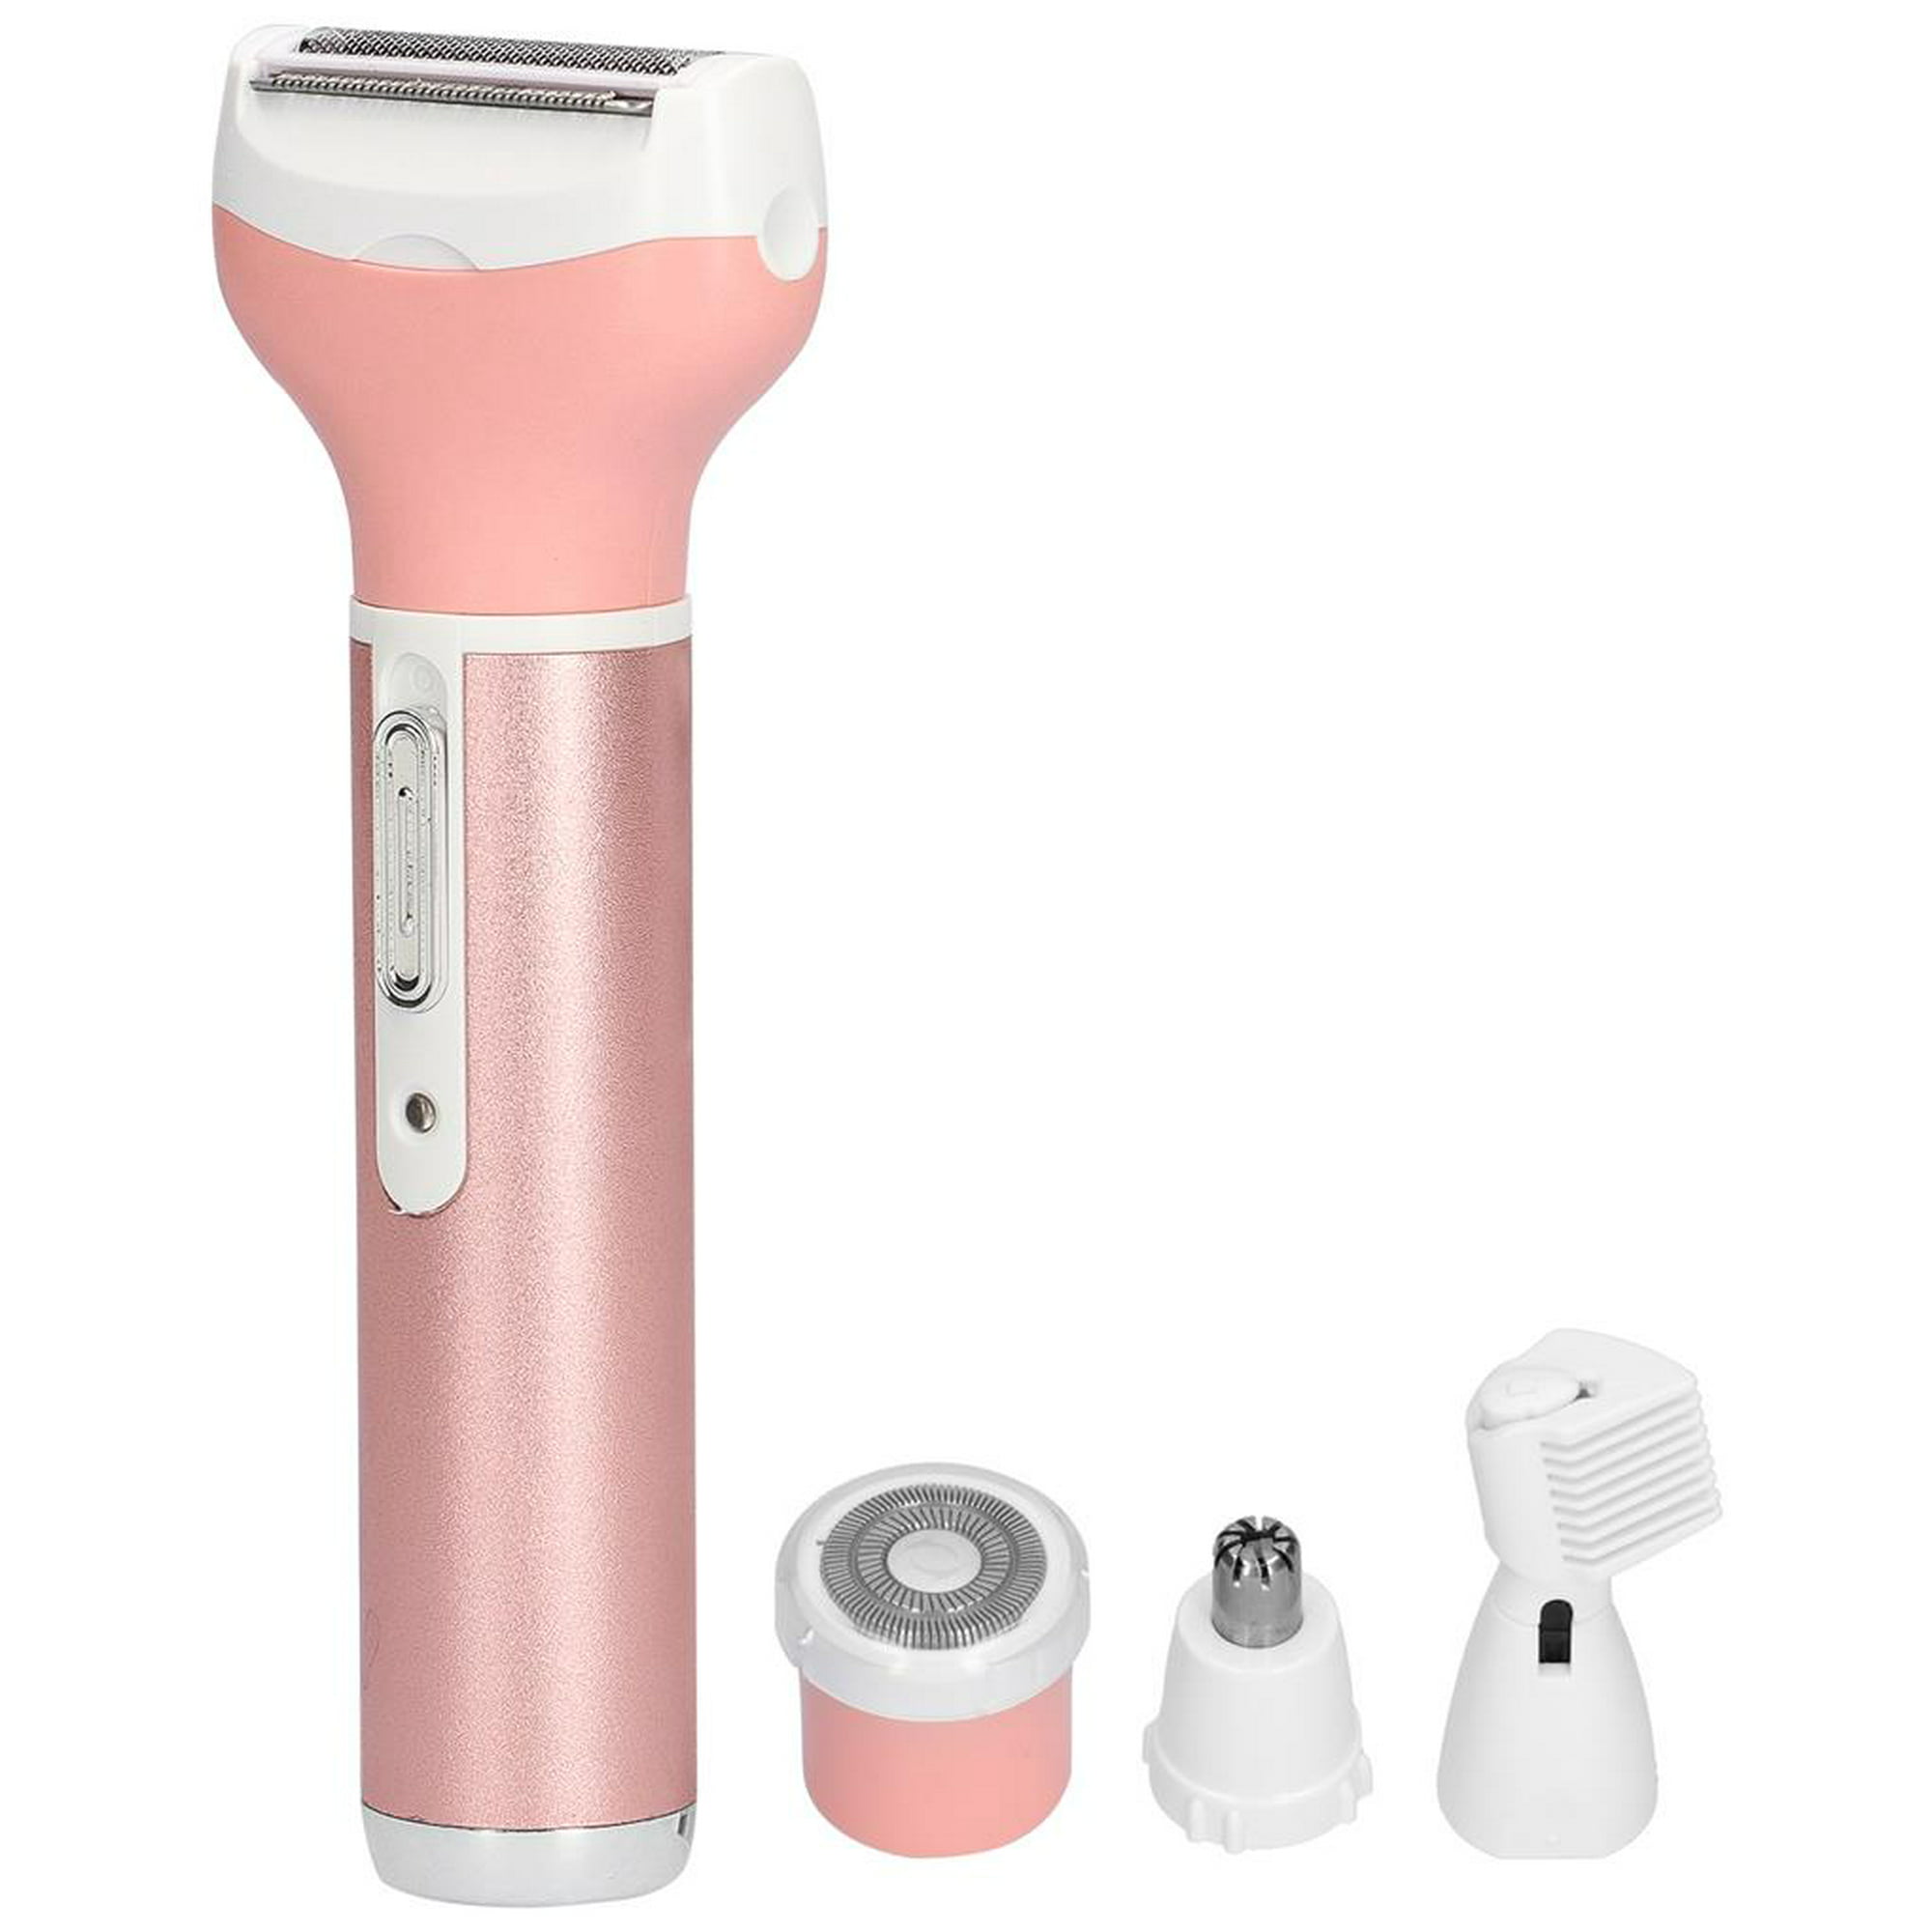 Comprar Depiladora eléctrica recargable por USB para mujer, depilación  facial y corporal, depiladora para mujer, recortadora de afeitado, Bikini,  piernas depilatorias, afeitadora